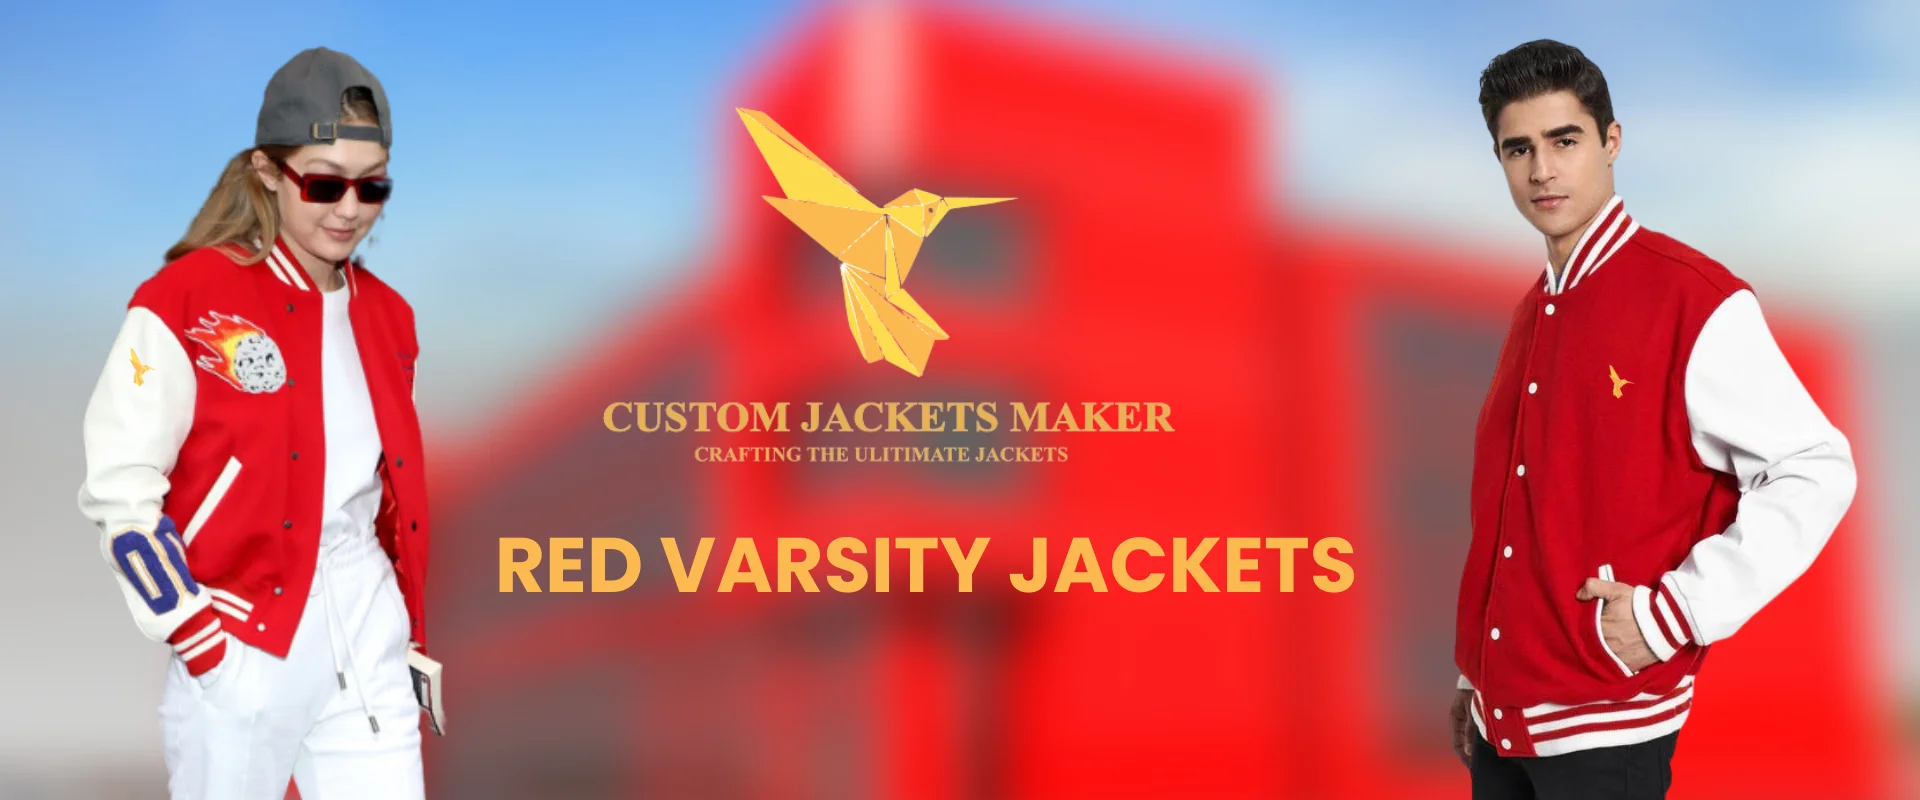 Banner Image of Red Varsity jacket